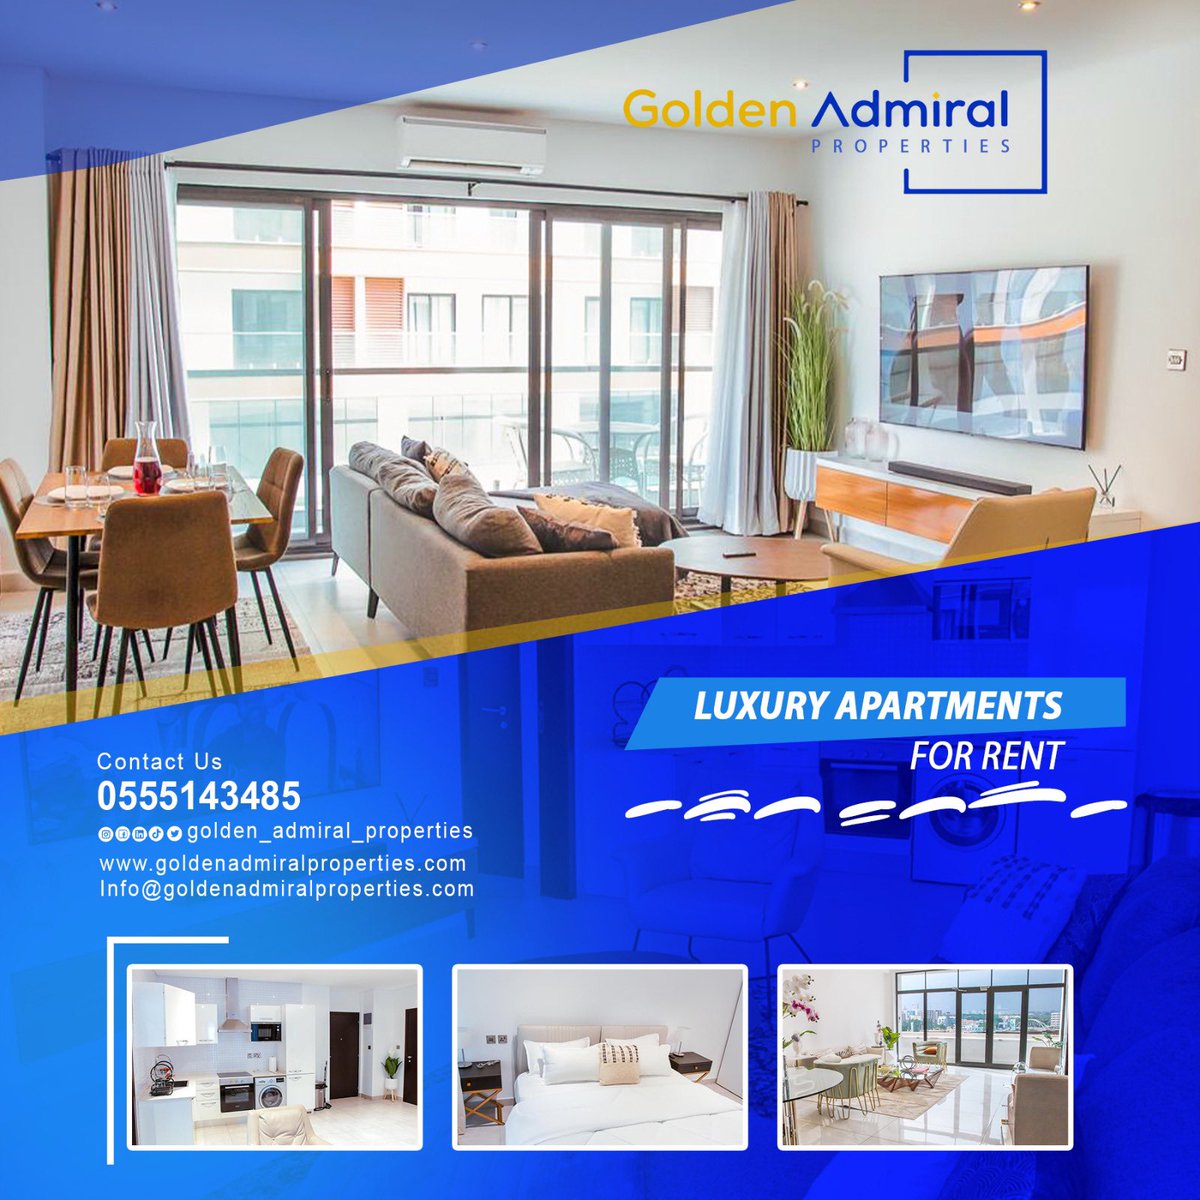 Luxury apartments for rent .  Patronize us today .

#goldenadmiralproperties #homesinghana #AdmiralResidence #propertiesinghana #dubaihomes #luxuryliving #luxuryhomes #househunting #ghanahomes #weekendgoals